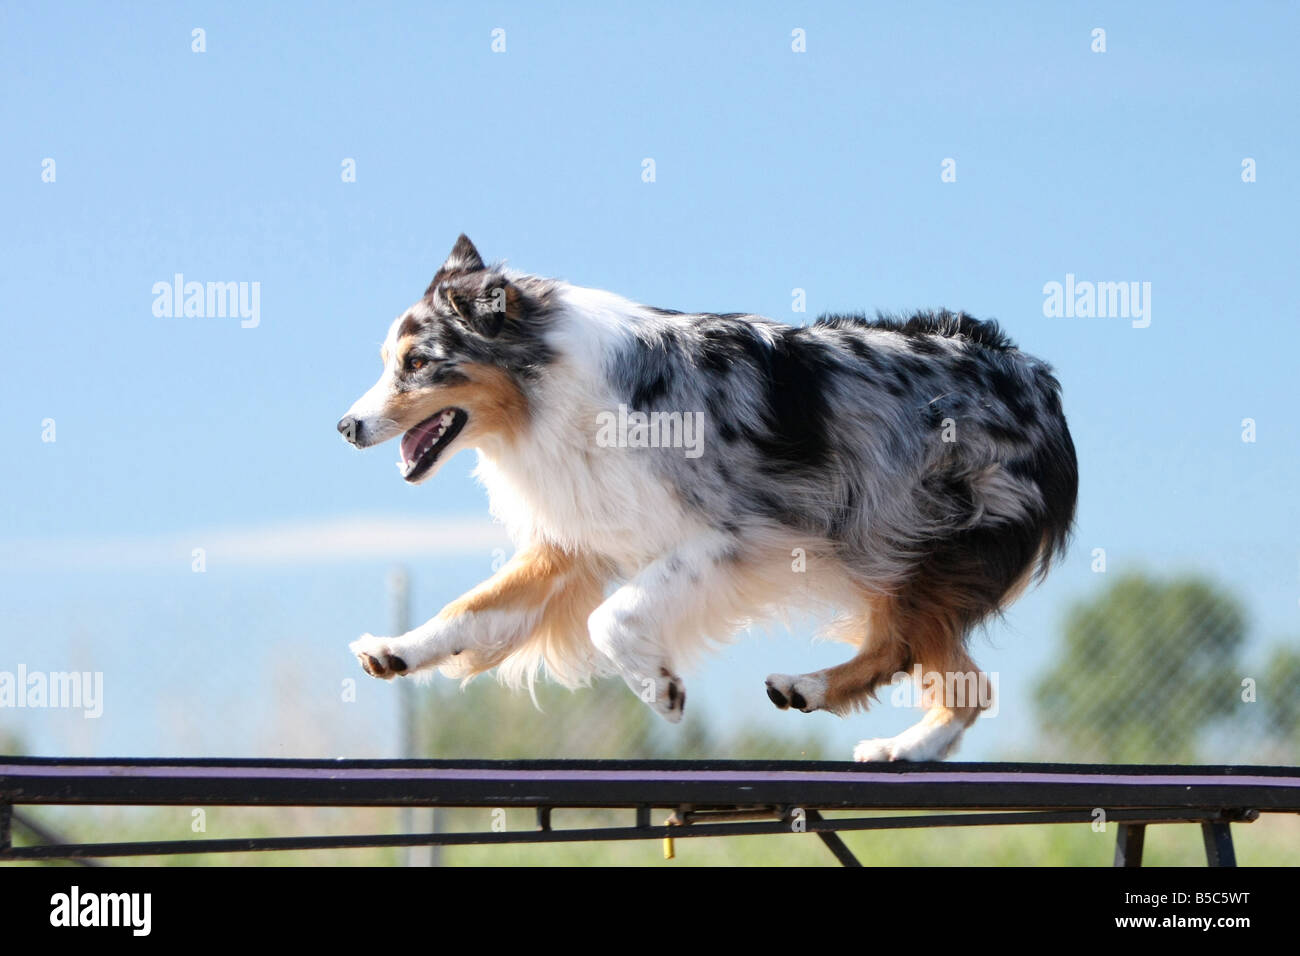 Australian shepherd running across a dog walk at an agility trial. Stock Photo